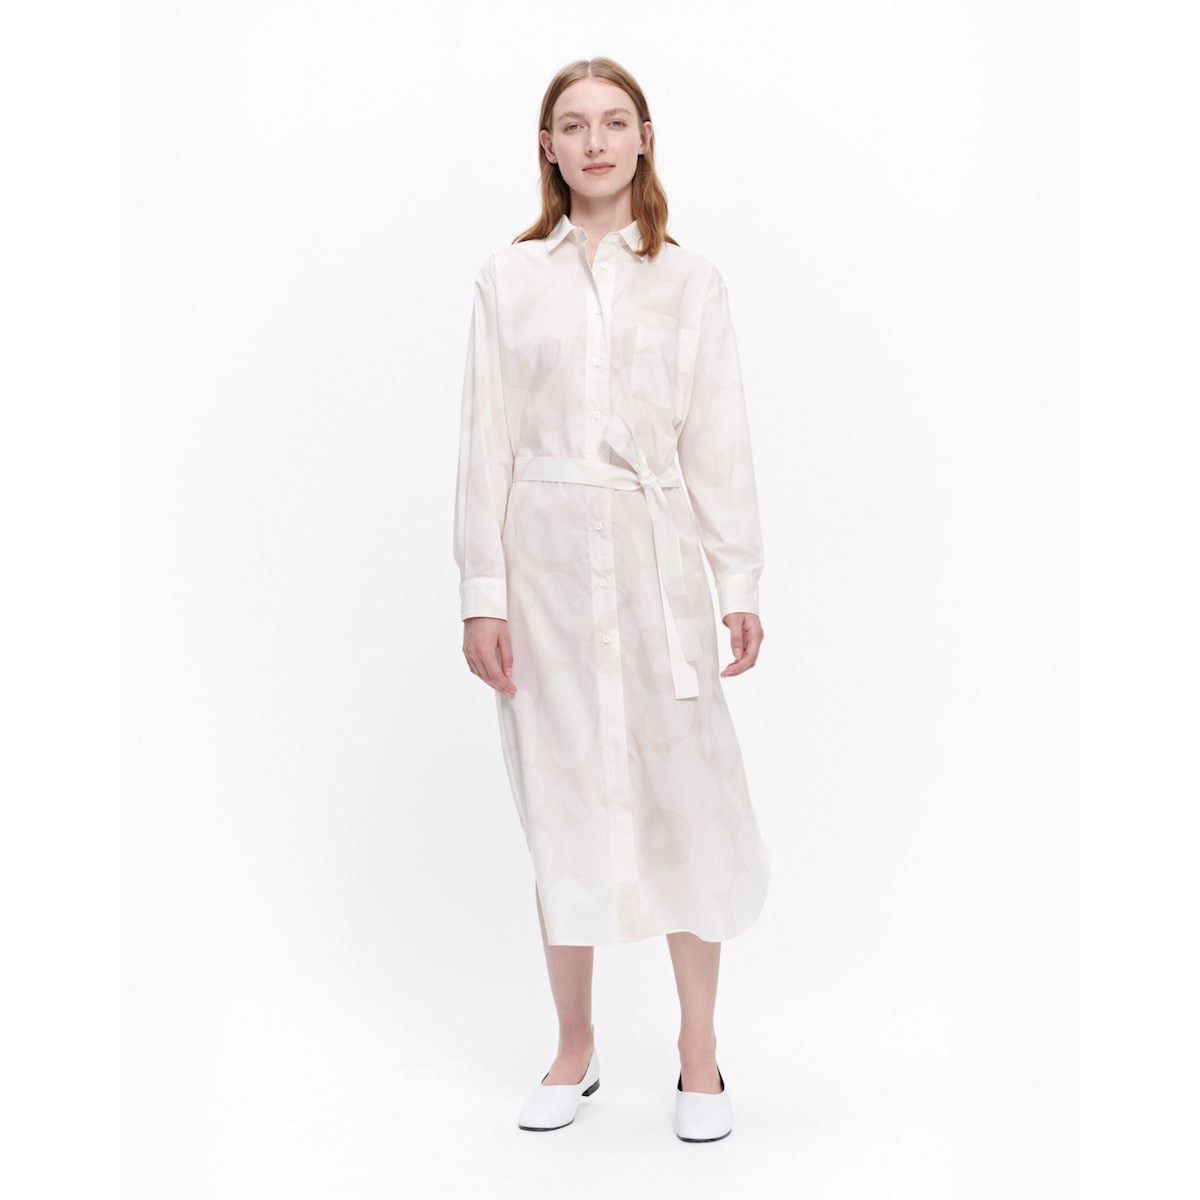 Unikko2 – Spring / Summer 2020 – Marimekko Ready-To-Wear